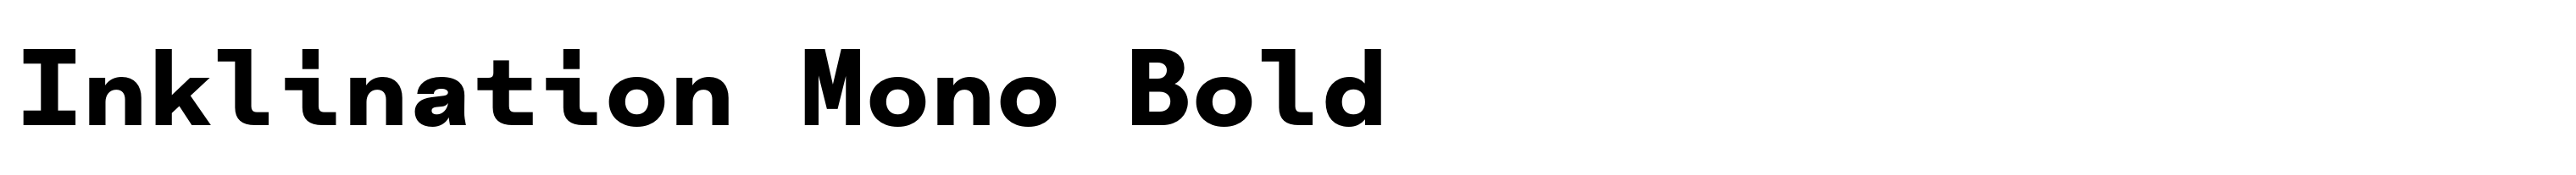 Inklination Mono Bold